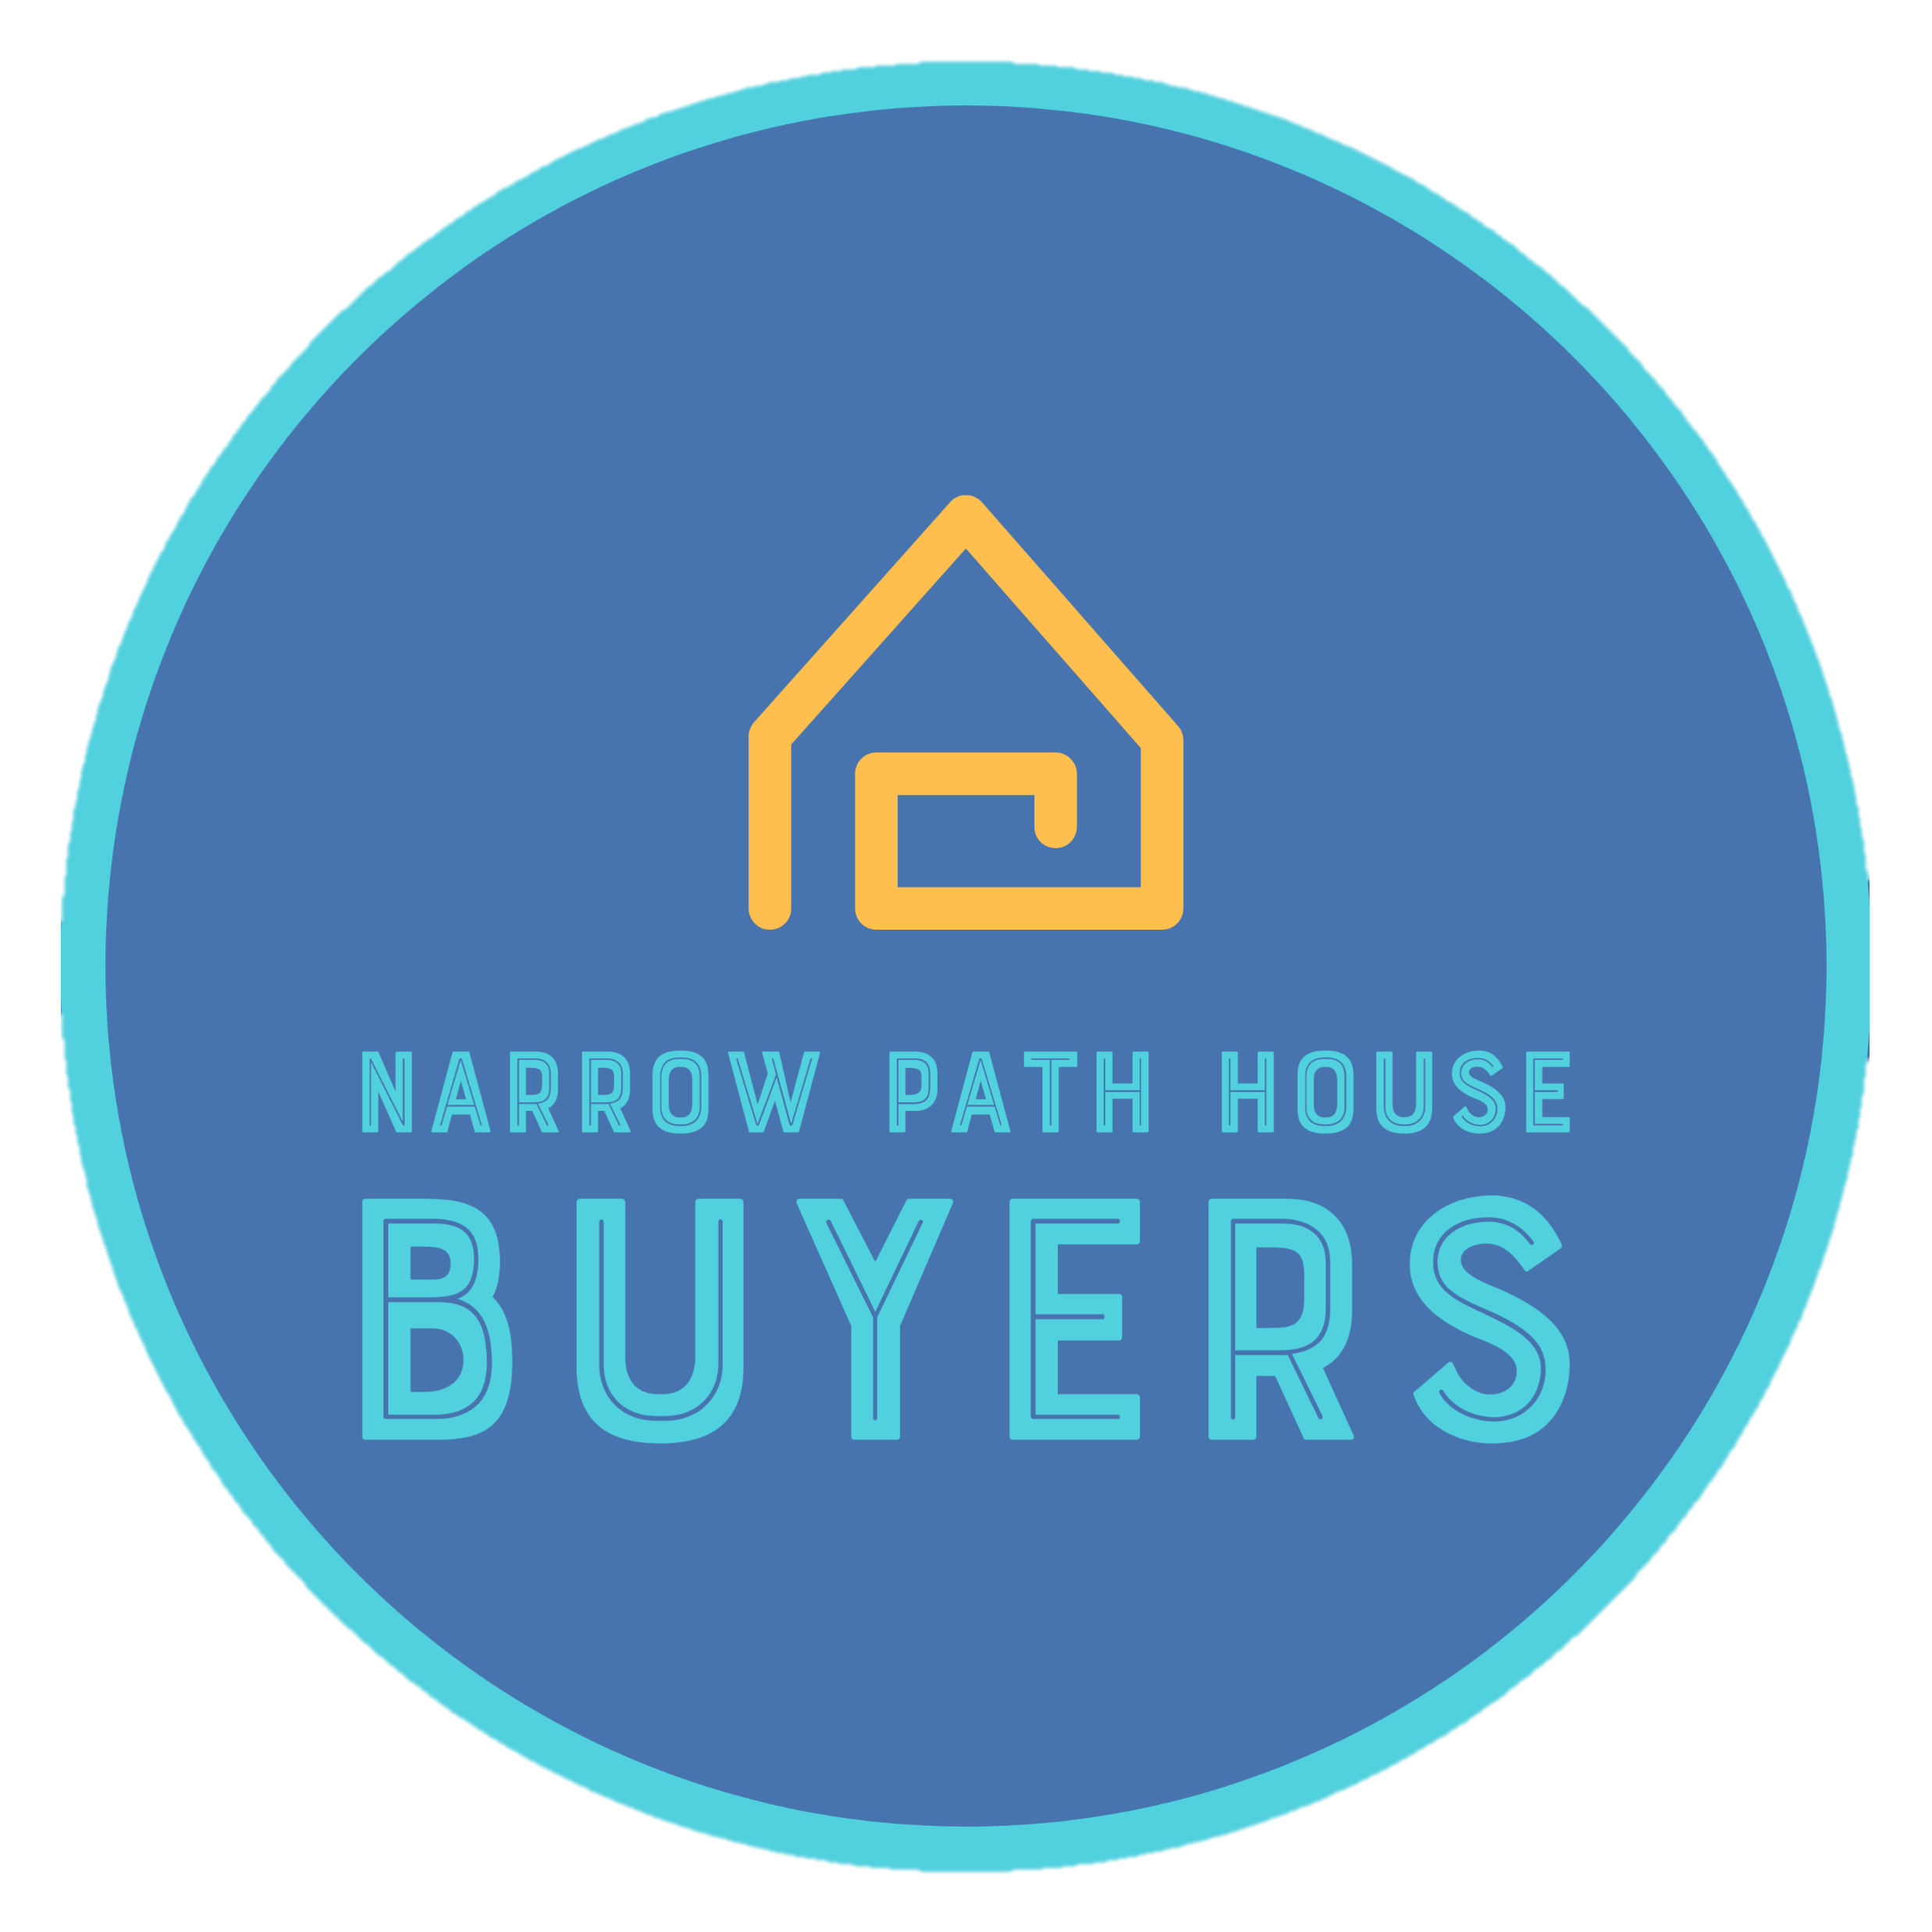 Narrow Path House Buyers logo